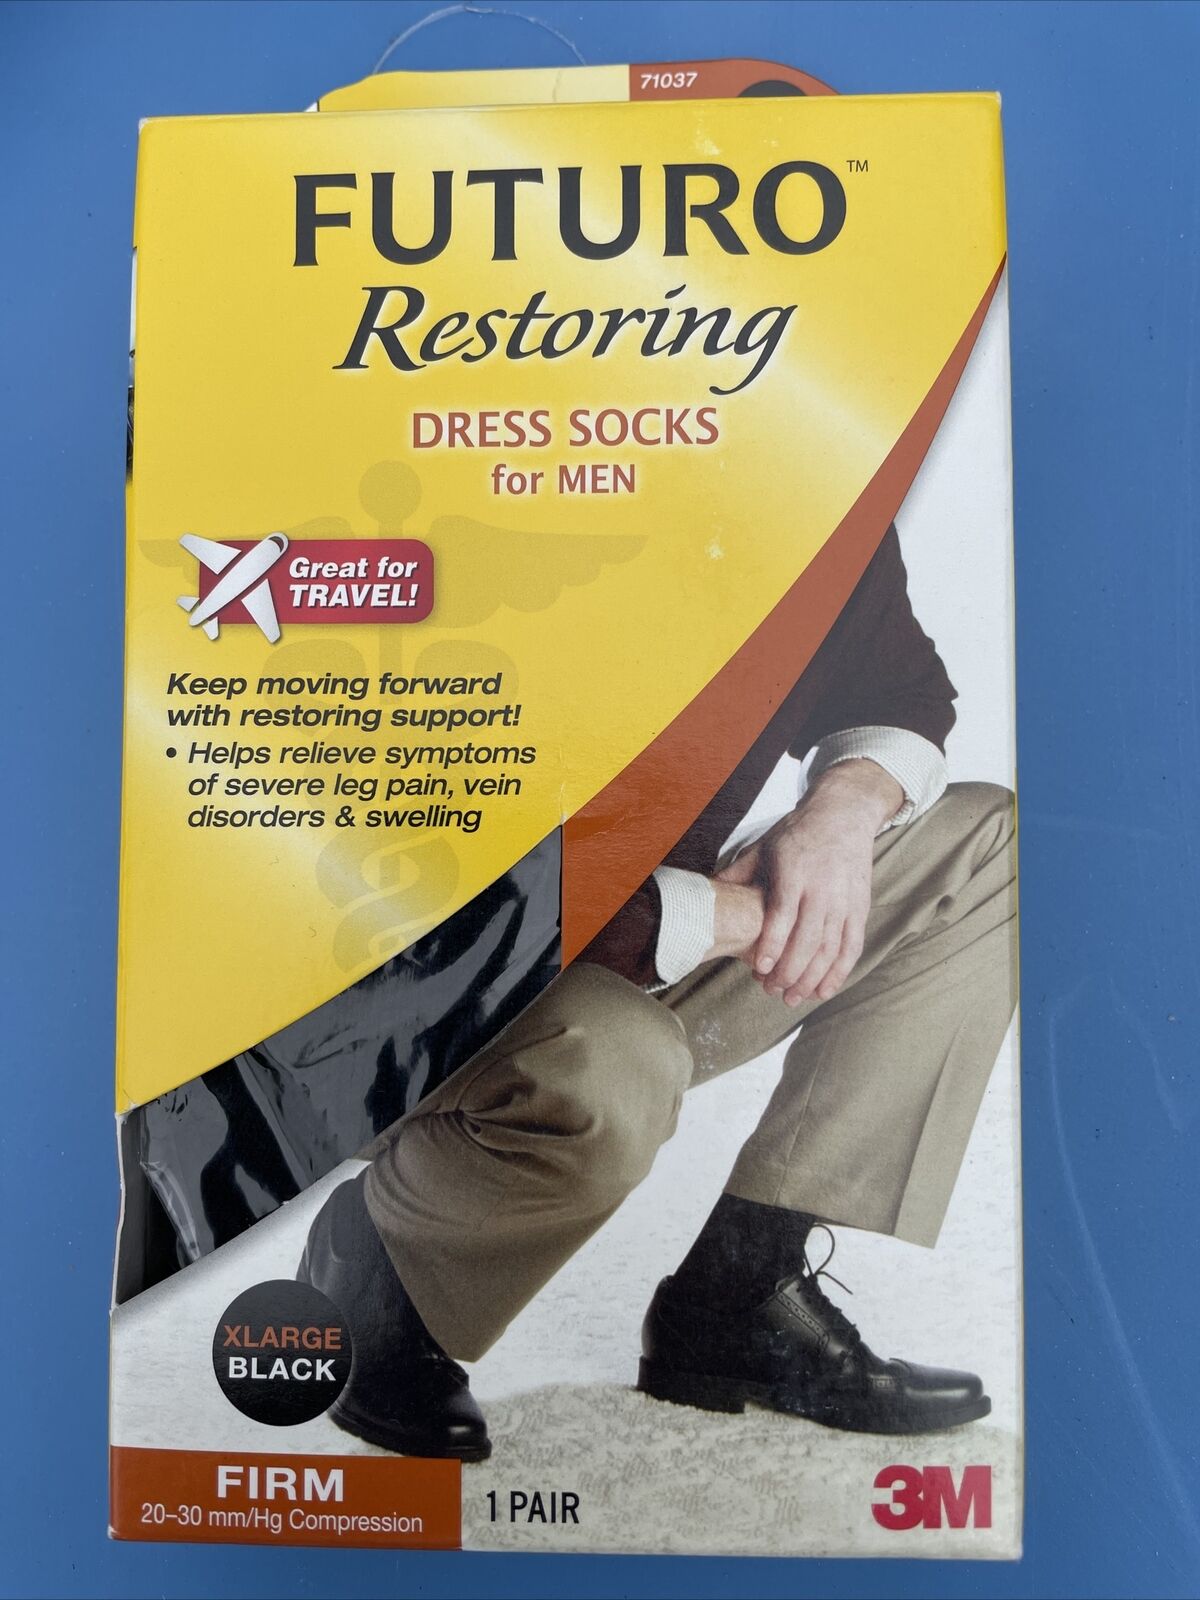  NEW Futuro Restoring Size Large BLACK Firm Compression Dress Socks Men 1 Pair